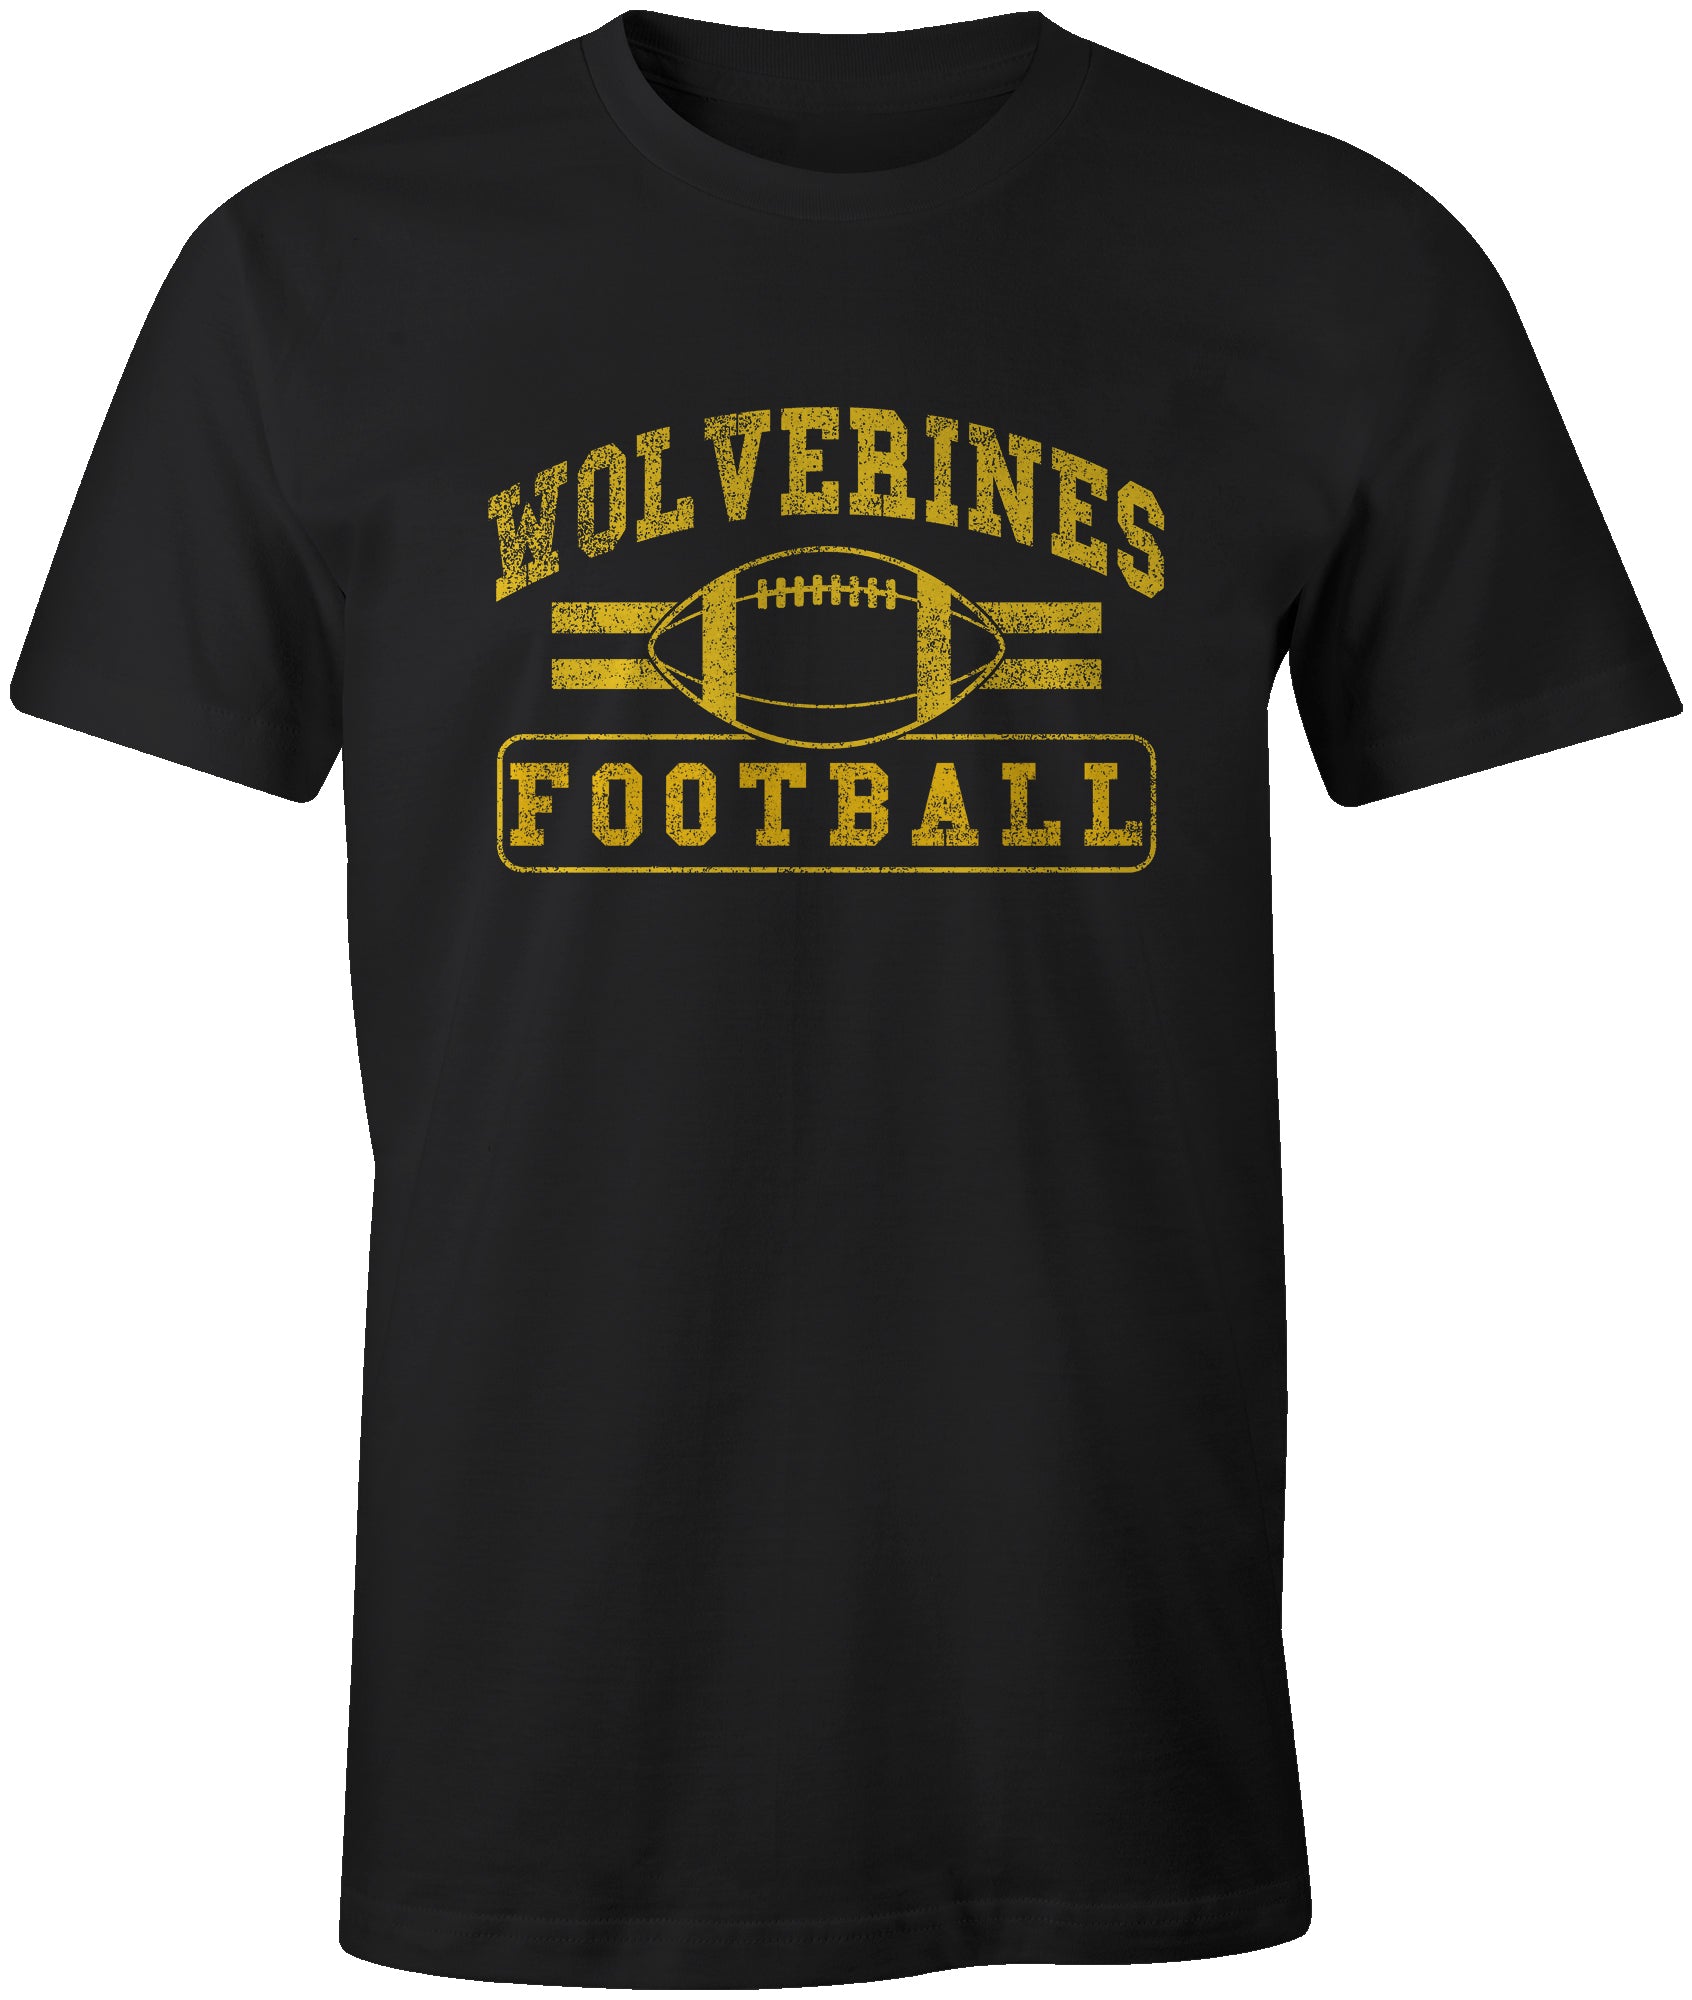 Wolverine Football Distressed Print T-Shirt